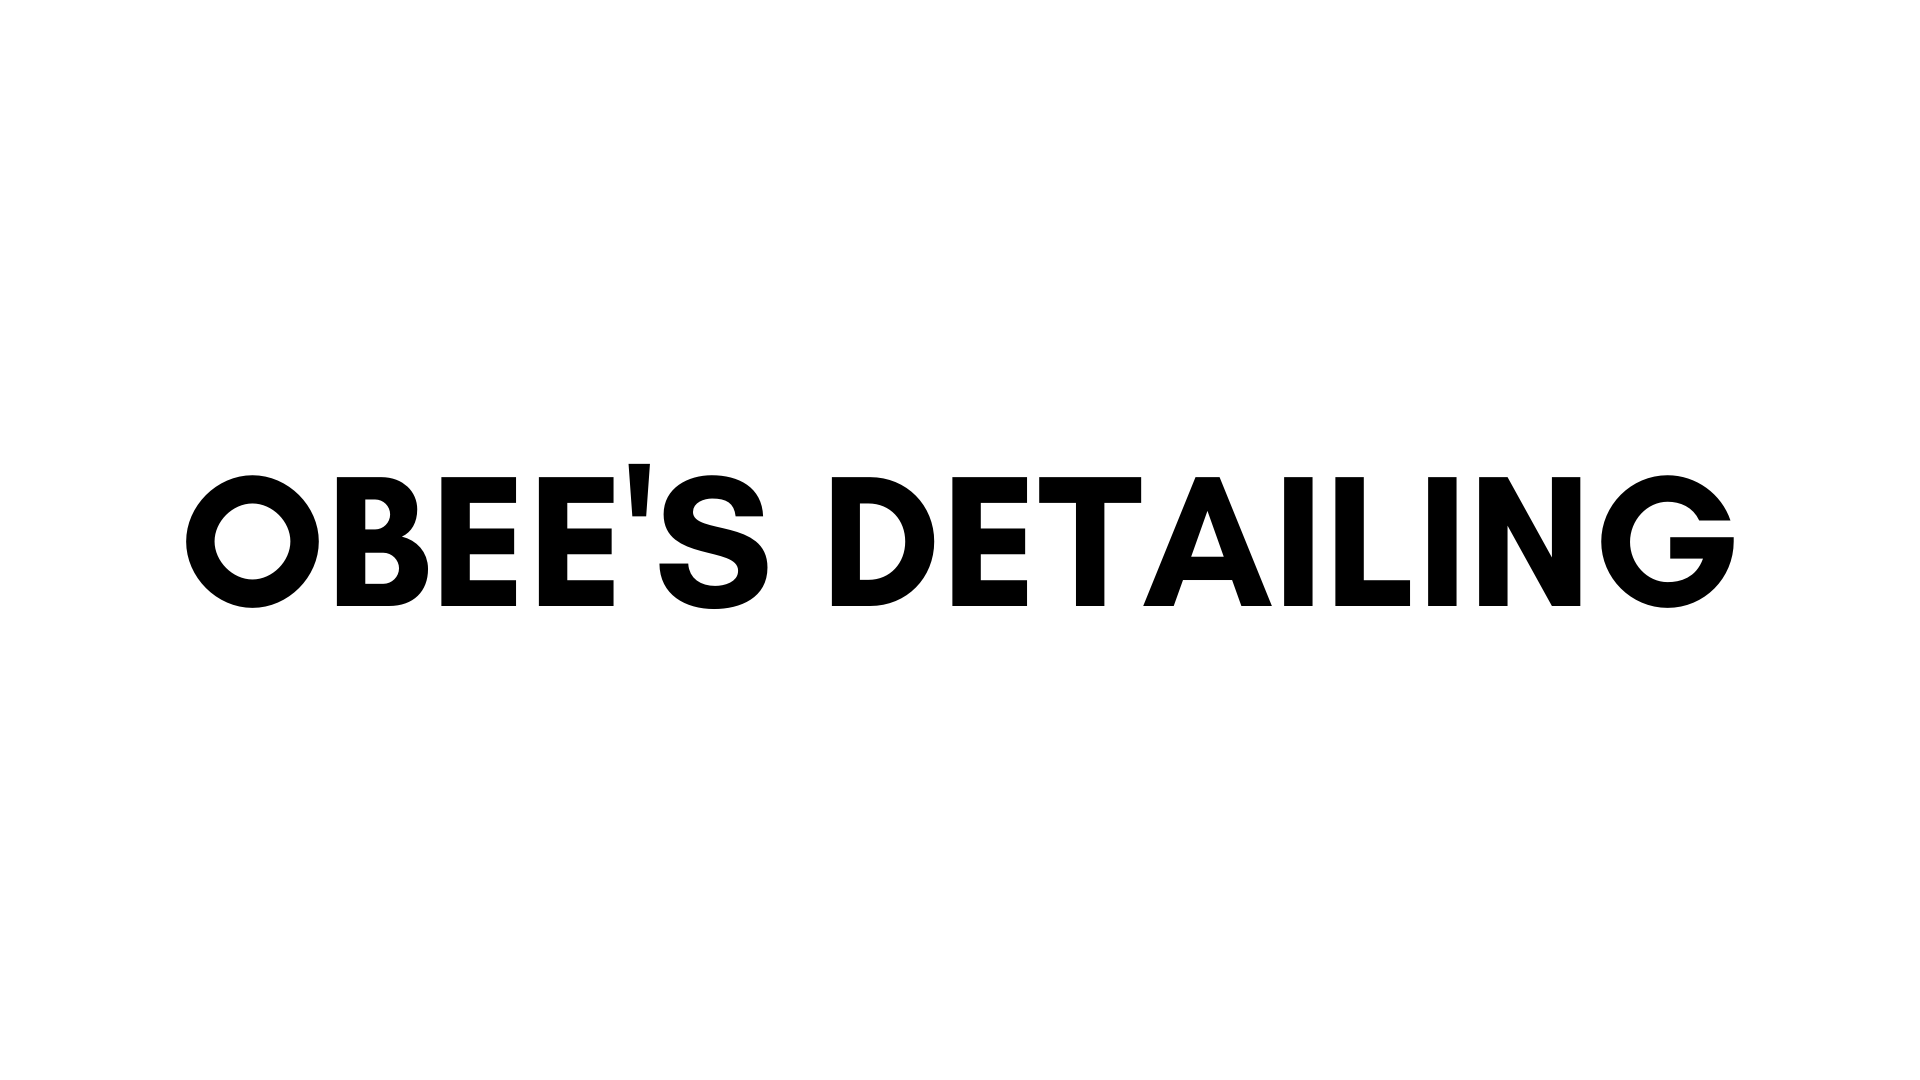 OBEE'S DETAILING